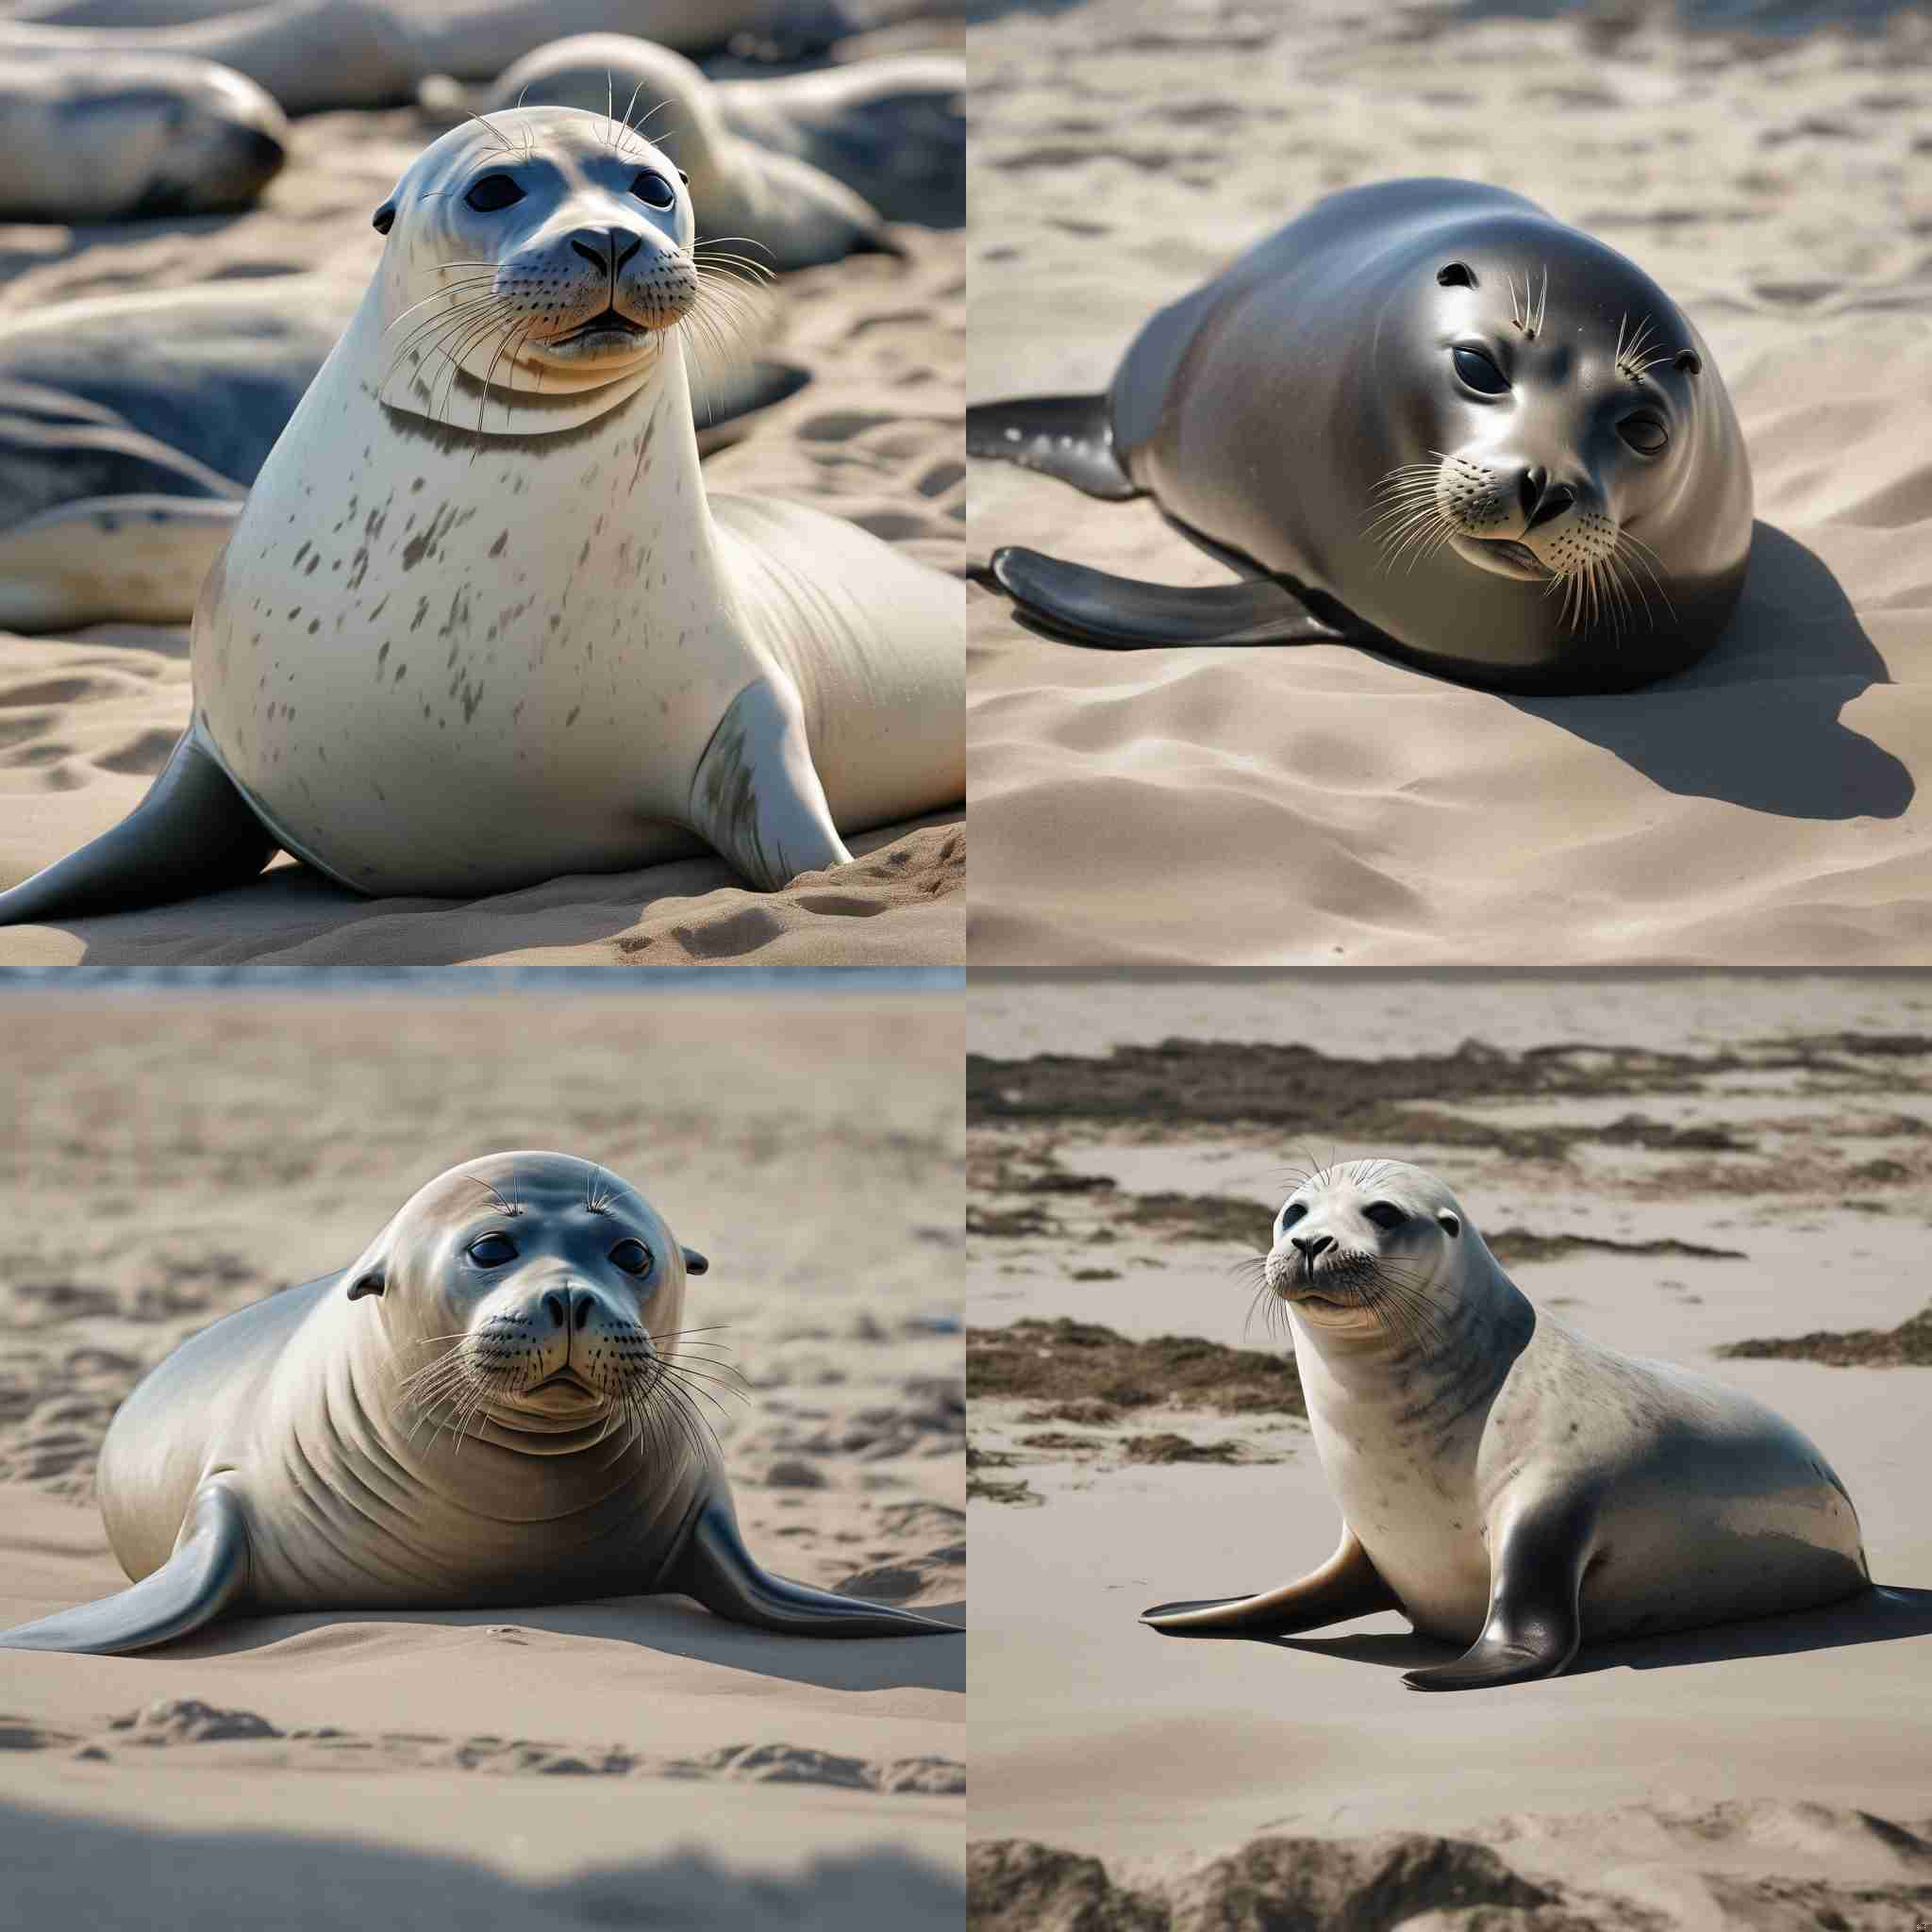 A sunbathing seal